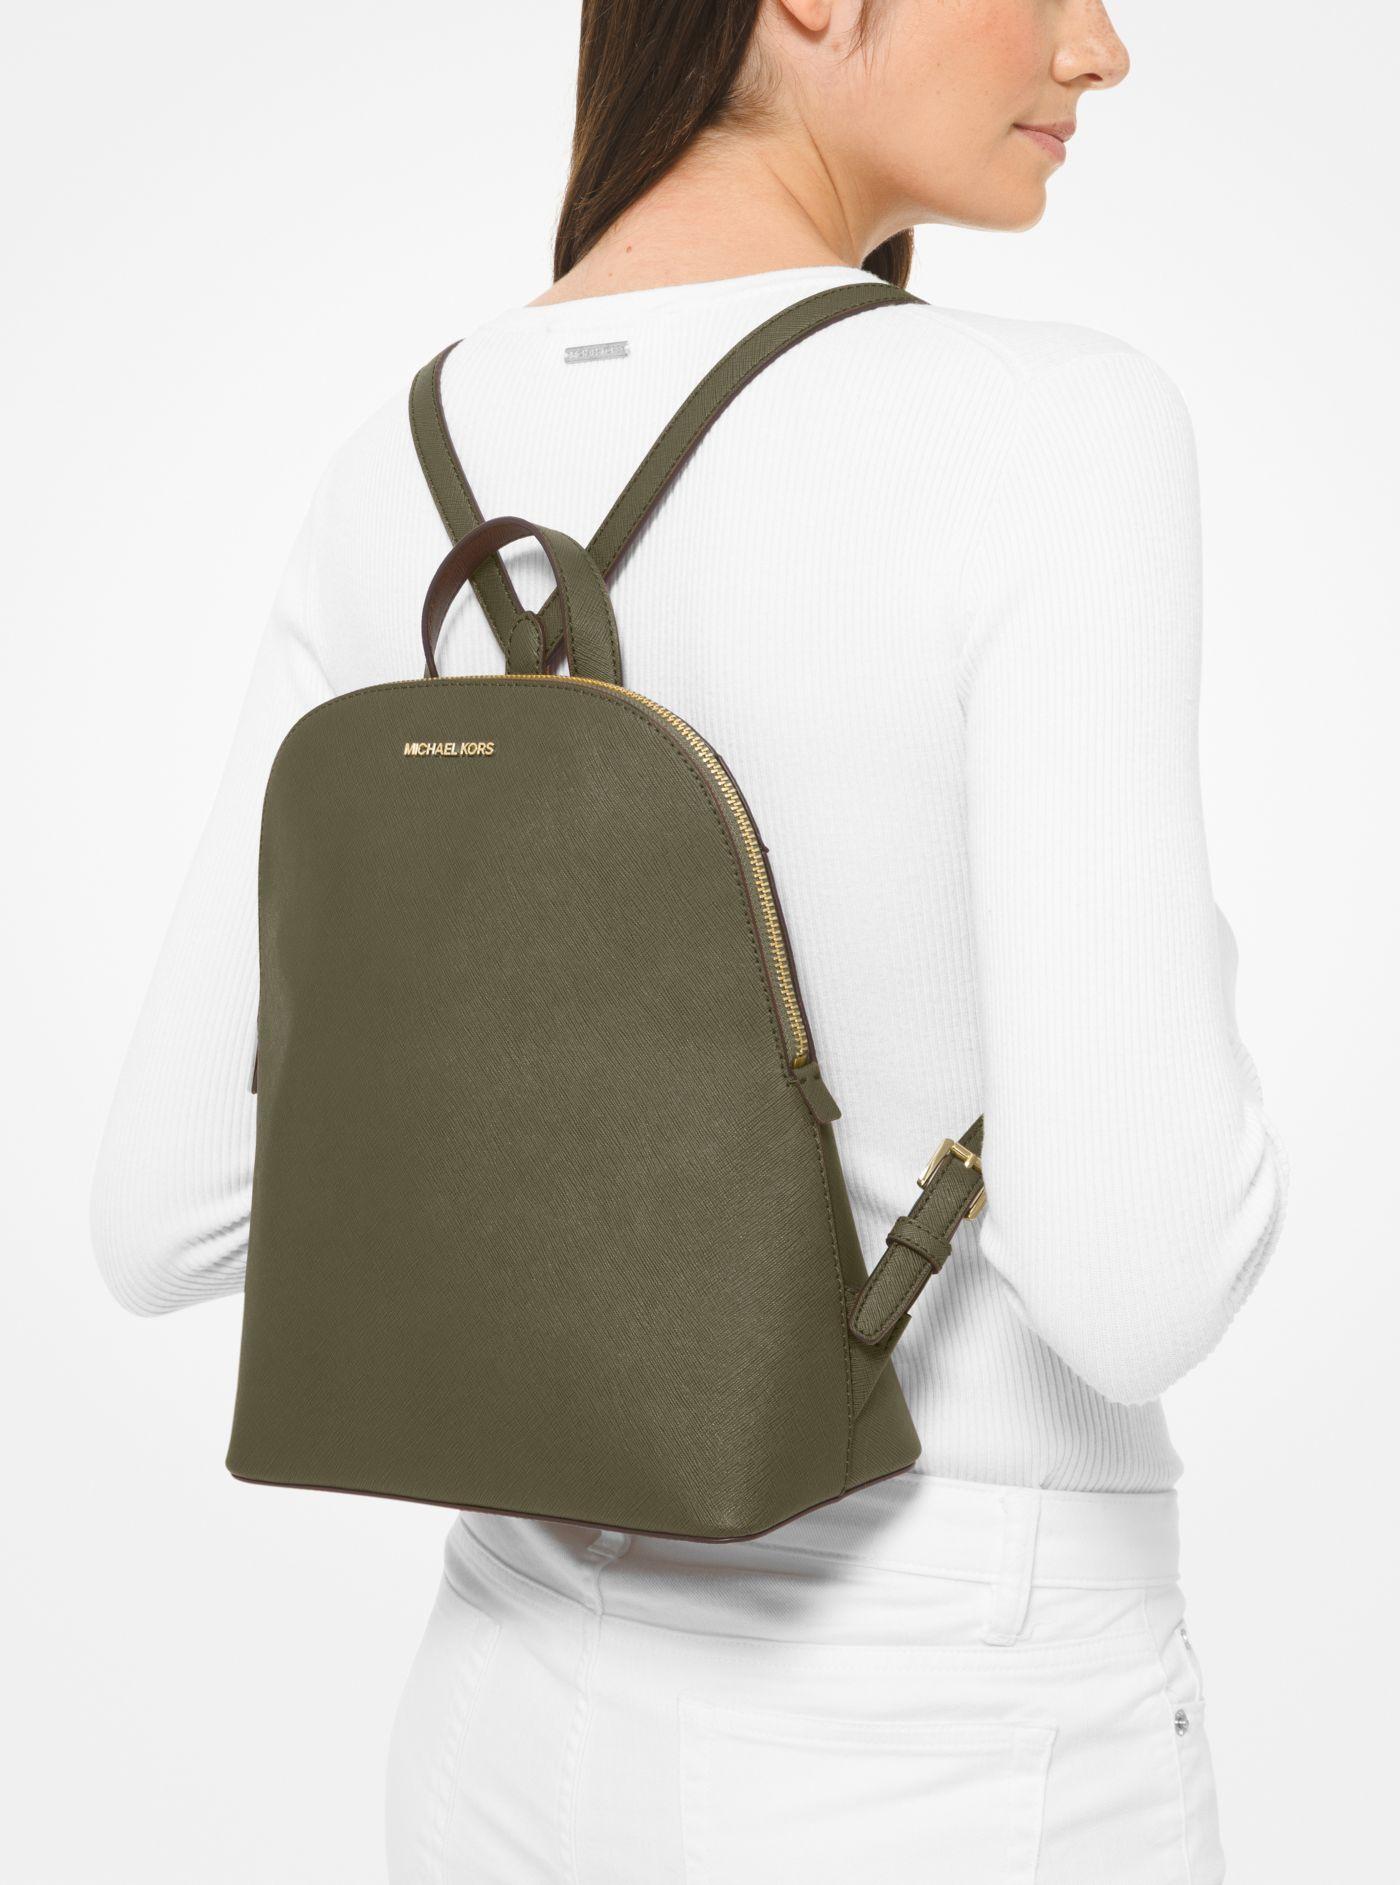 Inspireren desinfecteren Bouwen Michael Kors Cindy Large Saffiano Leather Backpack in Green | Lyst